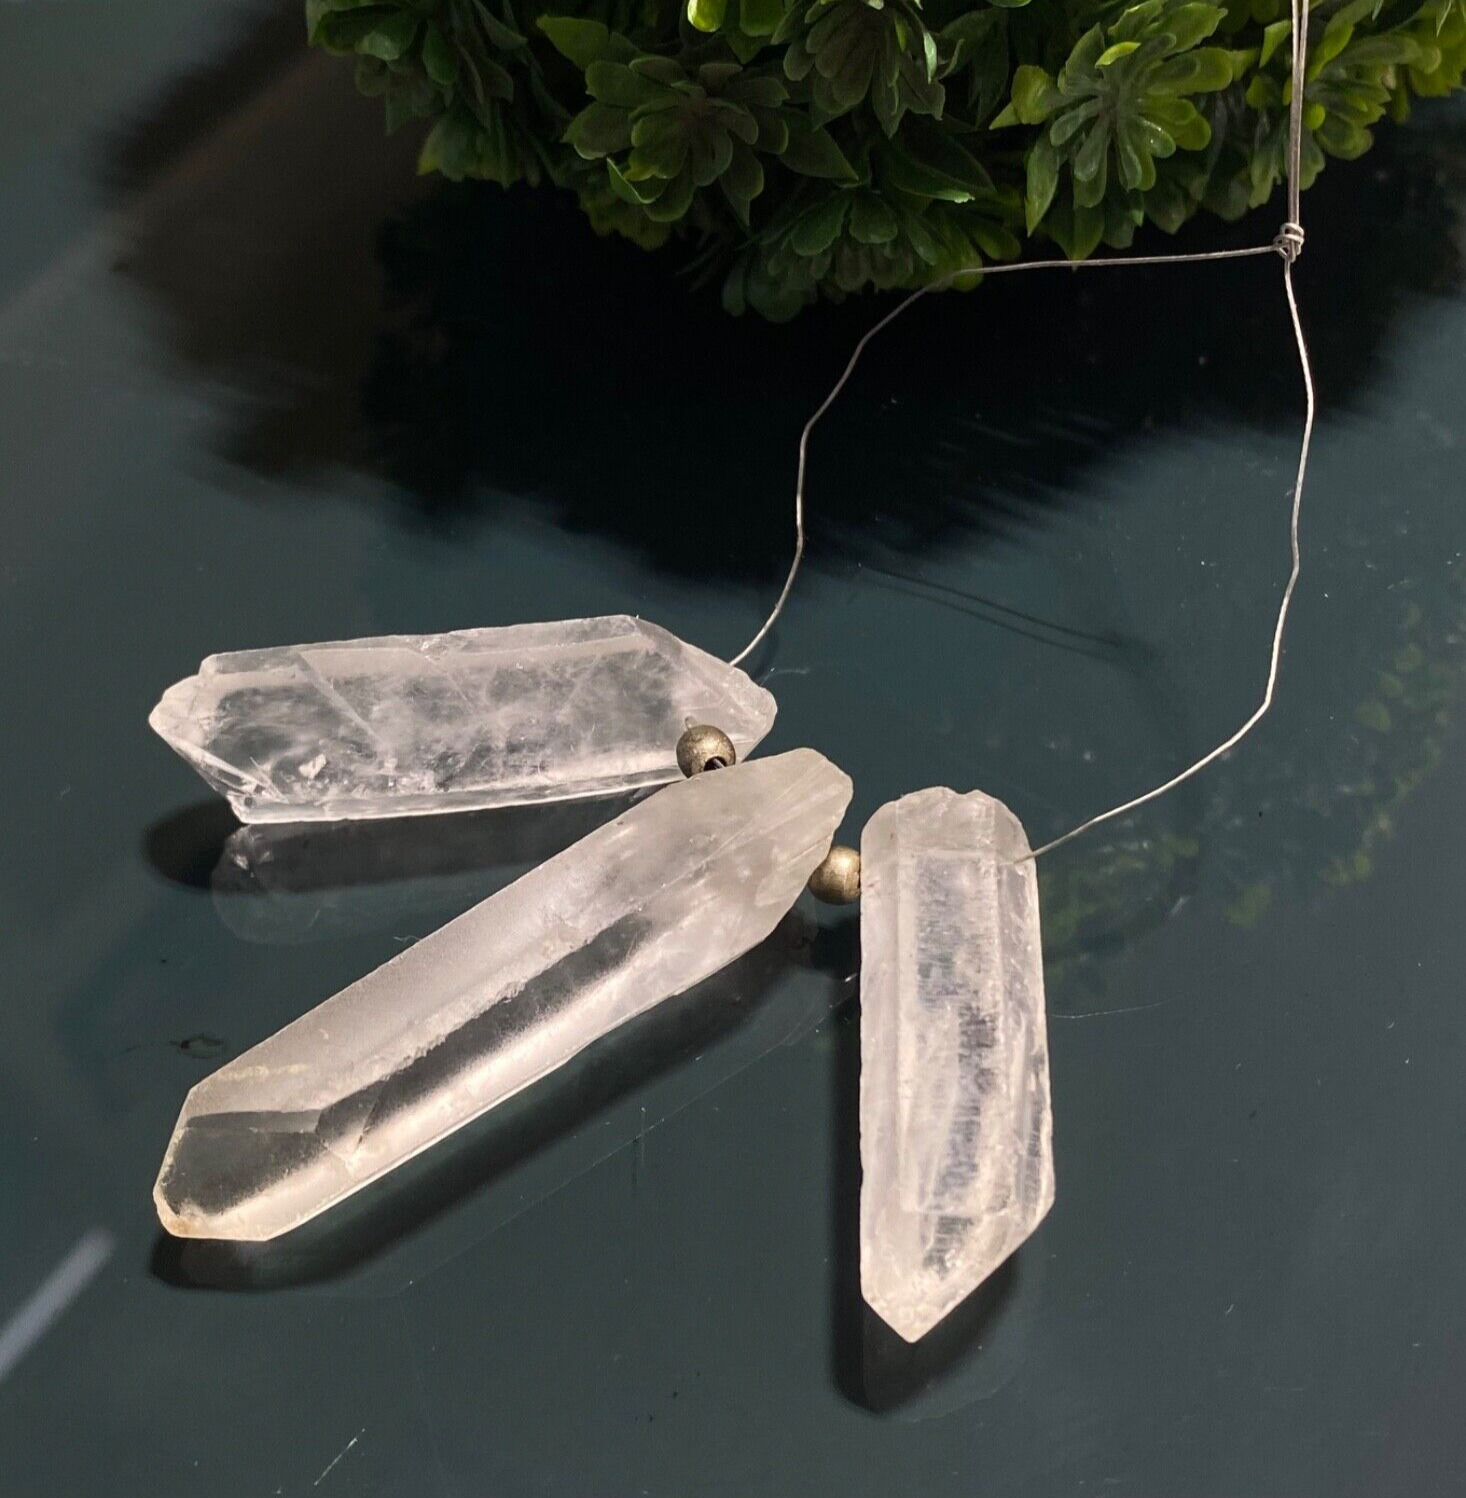 3 Pcs Clear Quartz Crystal Gemstone, Raw Healing Crystal For Pendant Making.